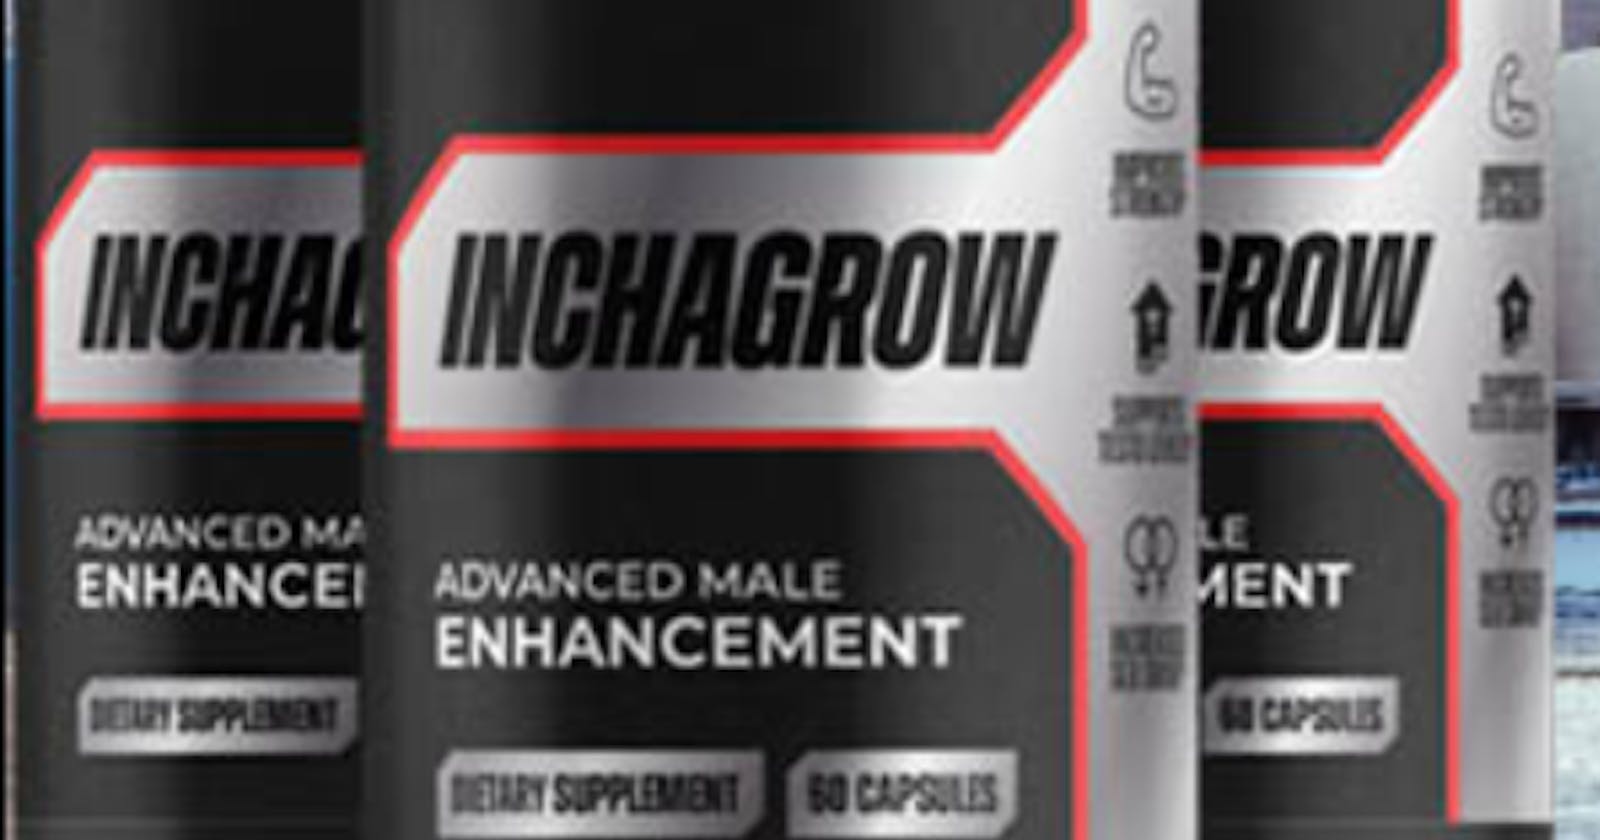 Inchagrow Male Enhancement | OFFICIAL Website - 100% Natural